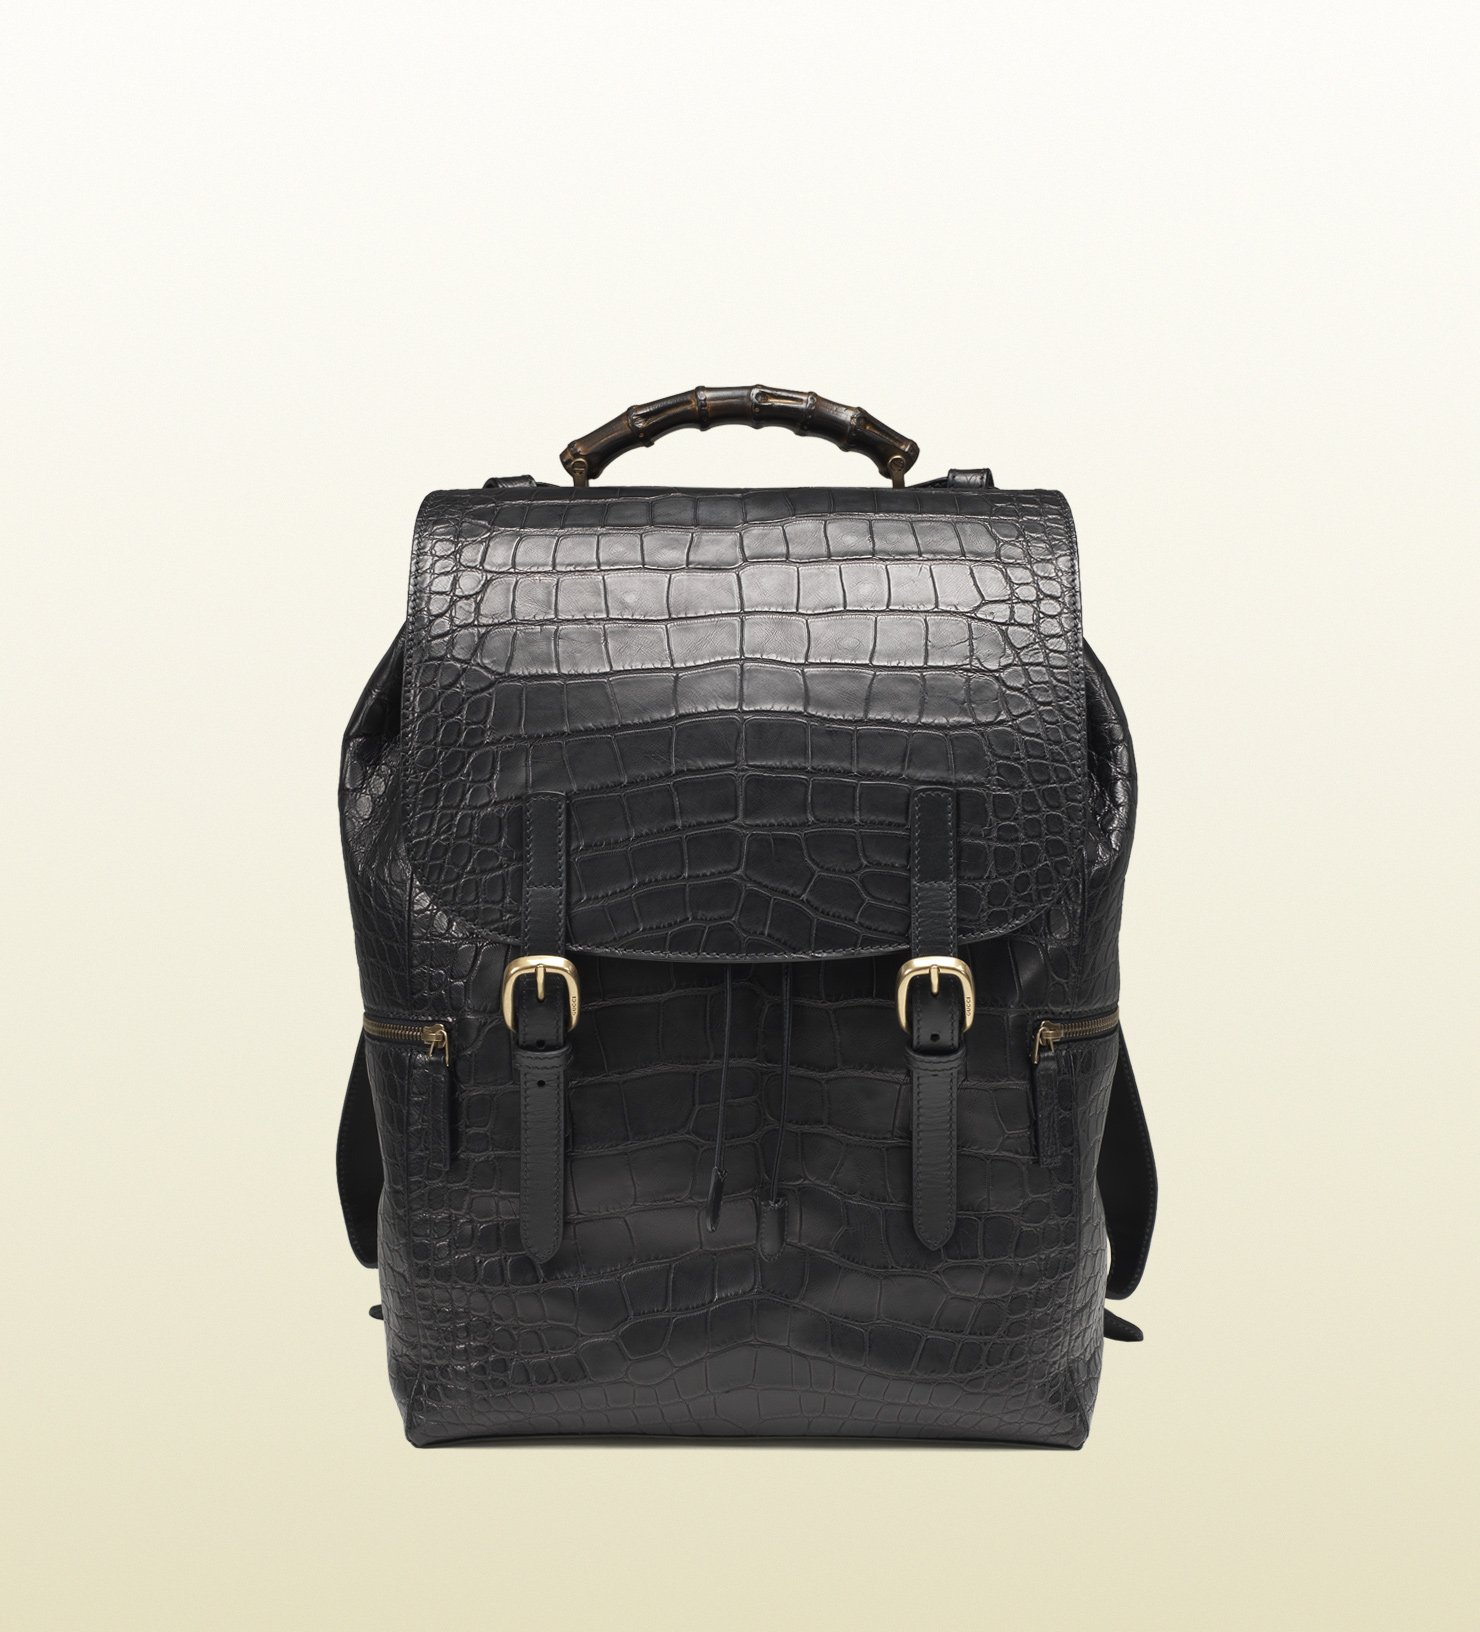 Gucci Black Crocodile Backpack in Black for Men - Lyst